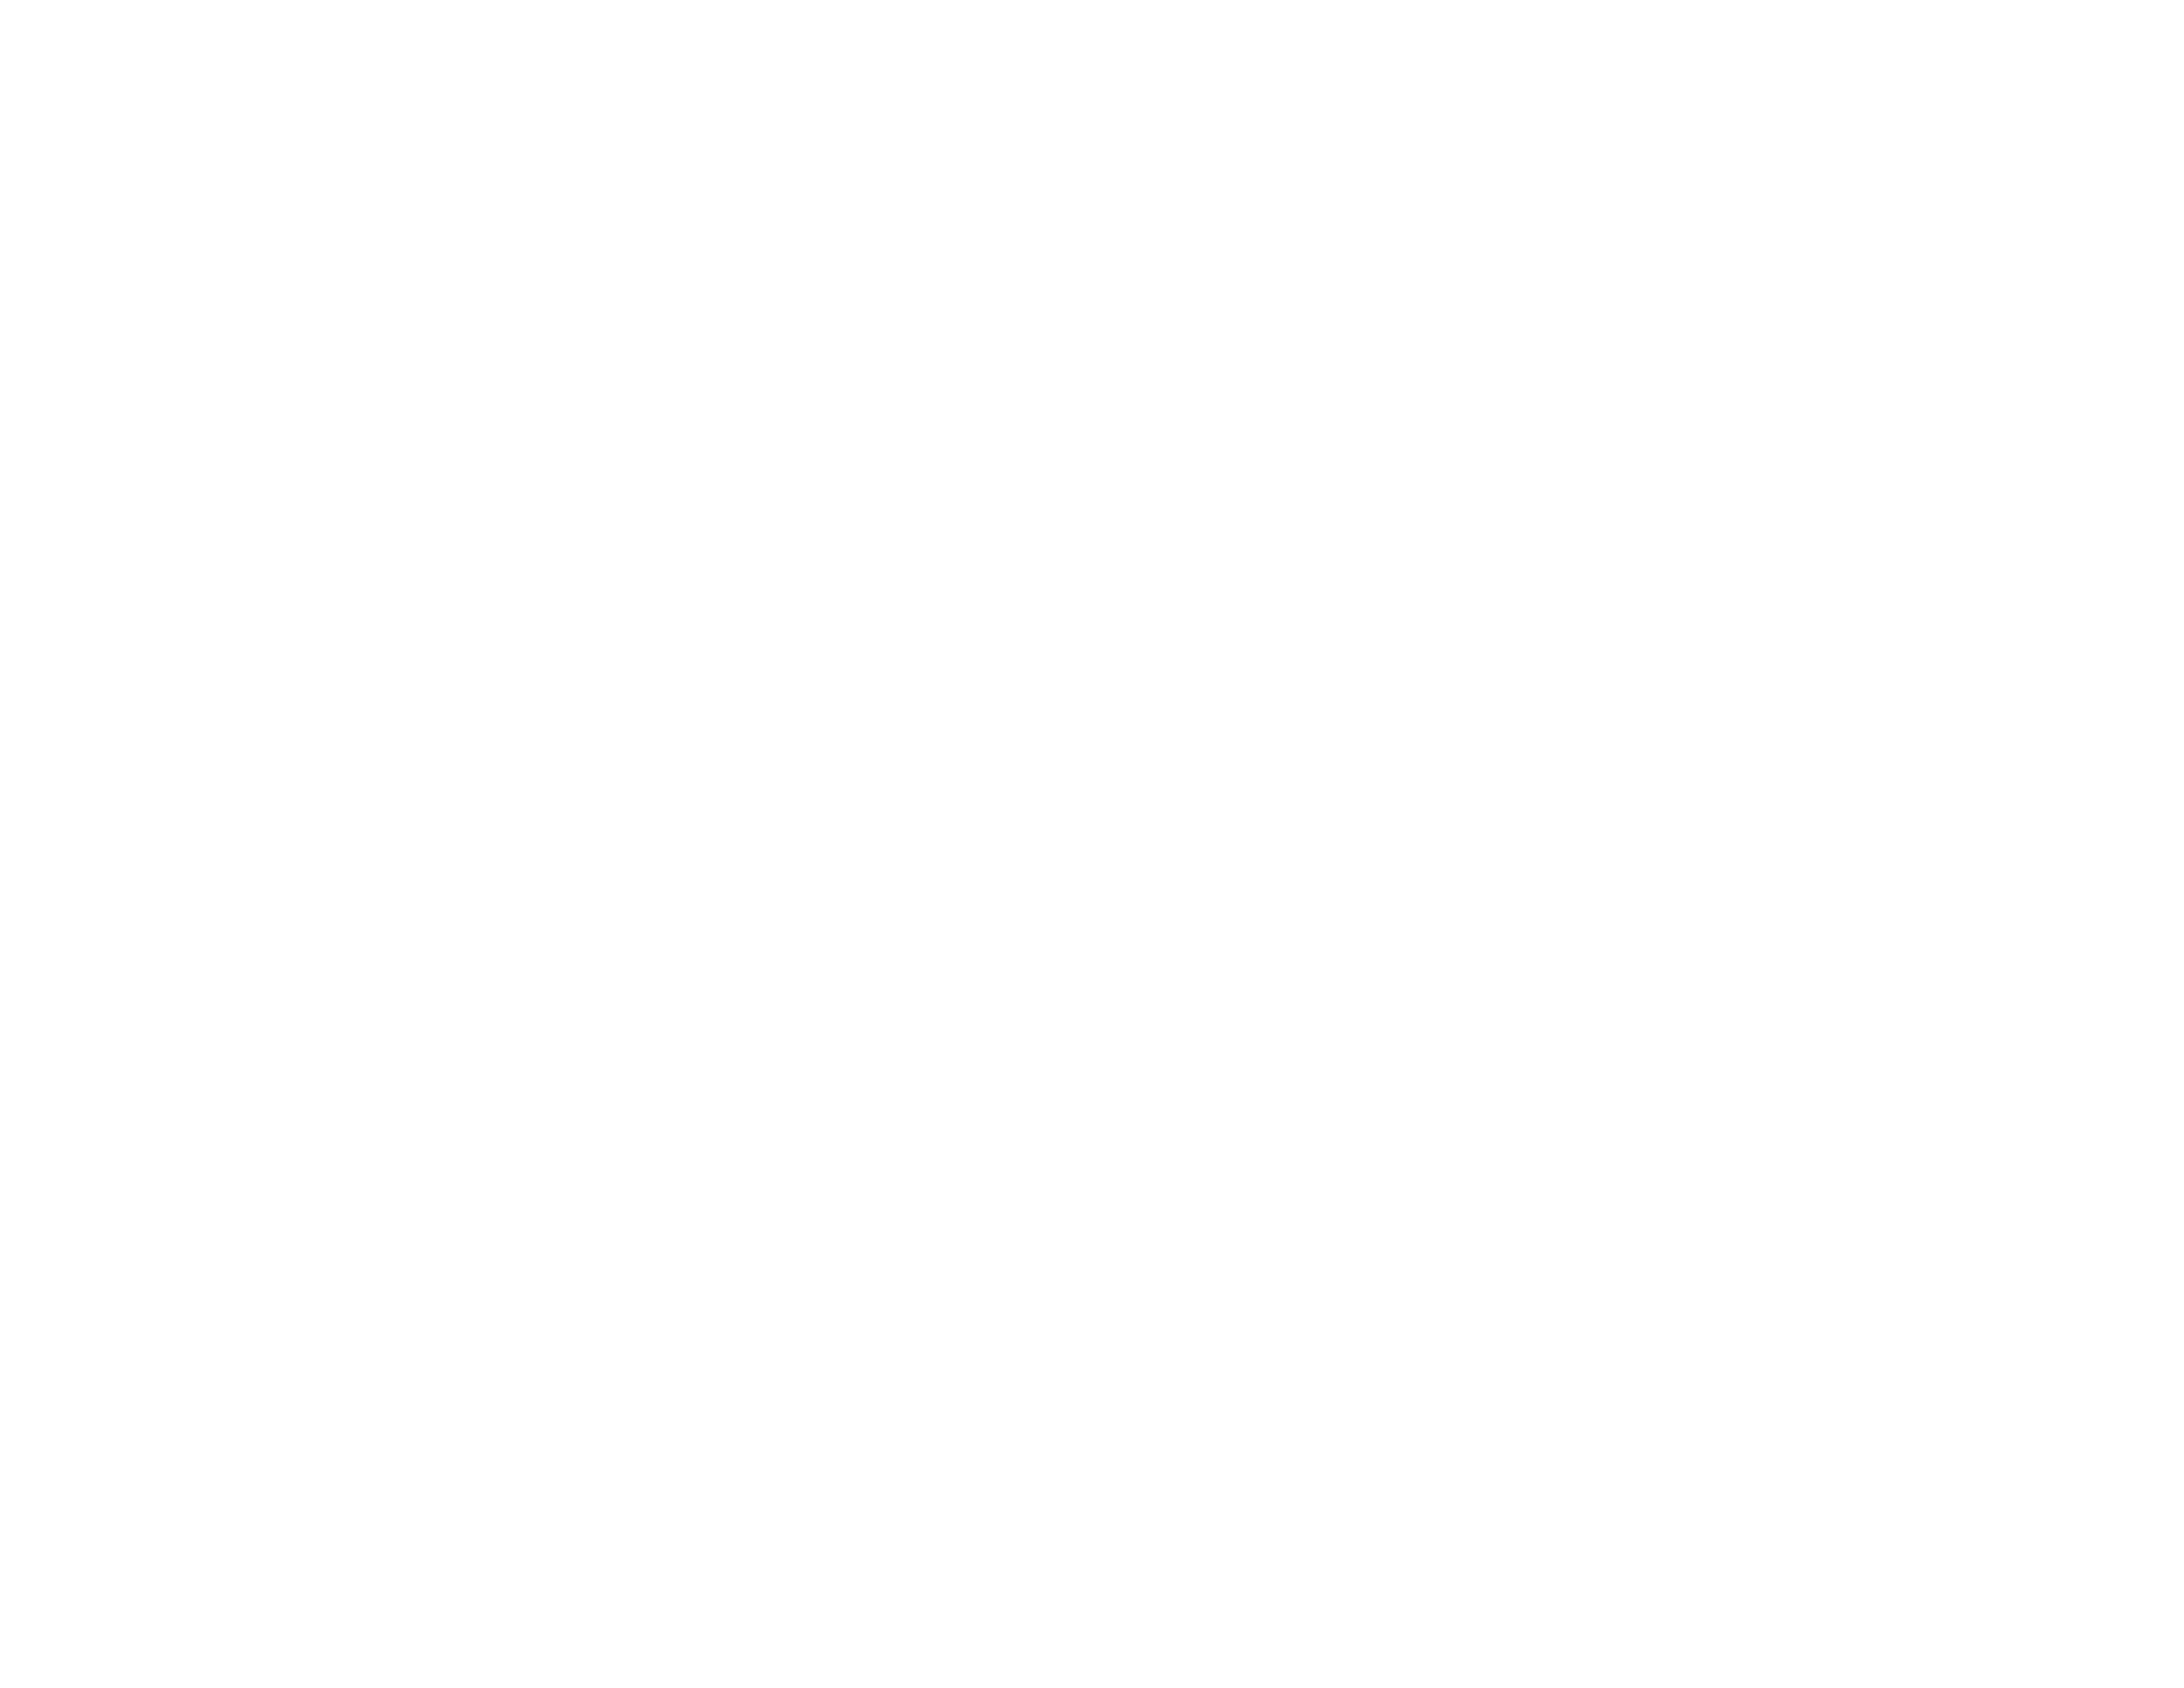 Brilliant Bodywork logo image